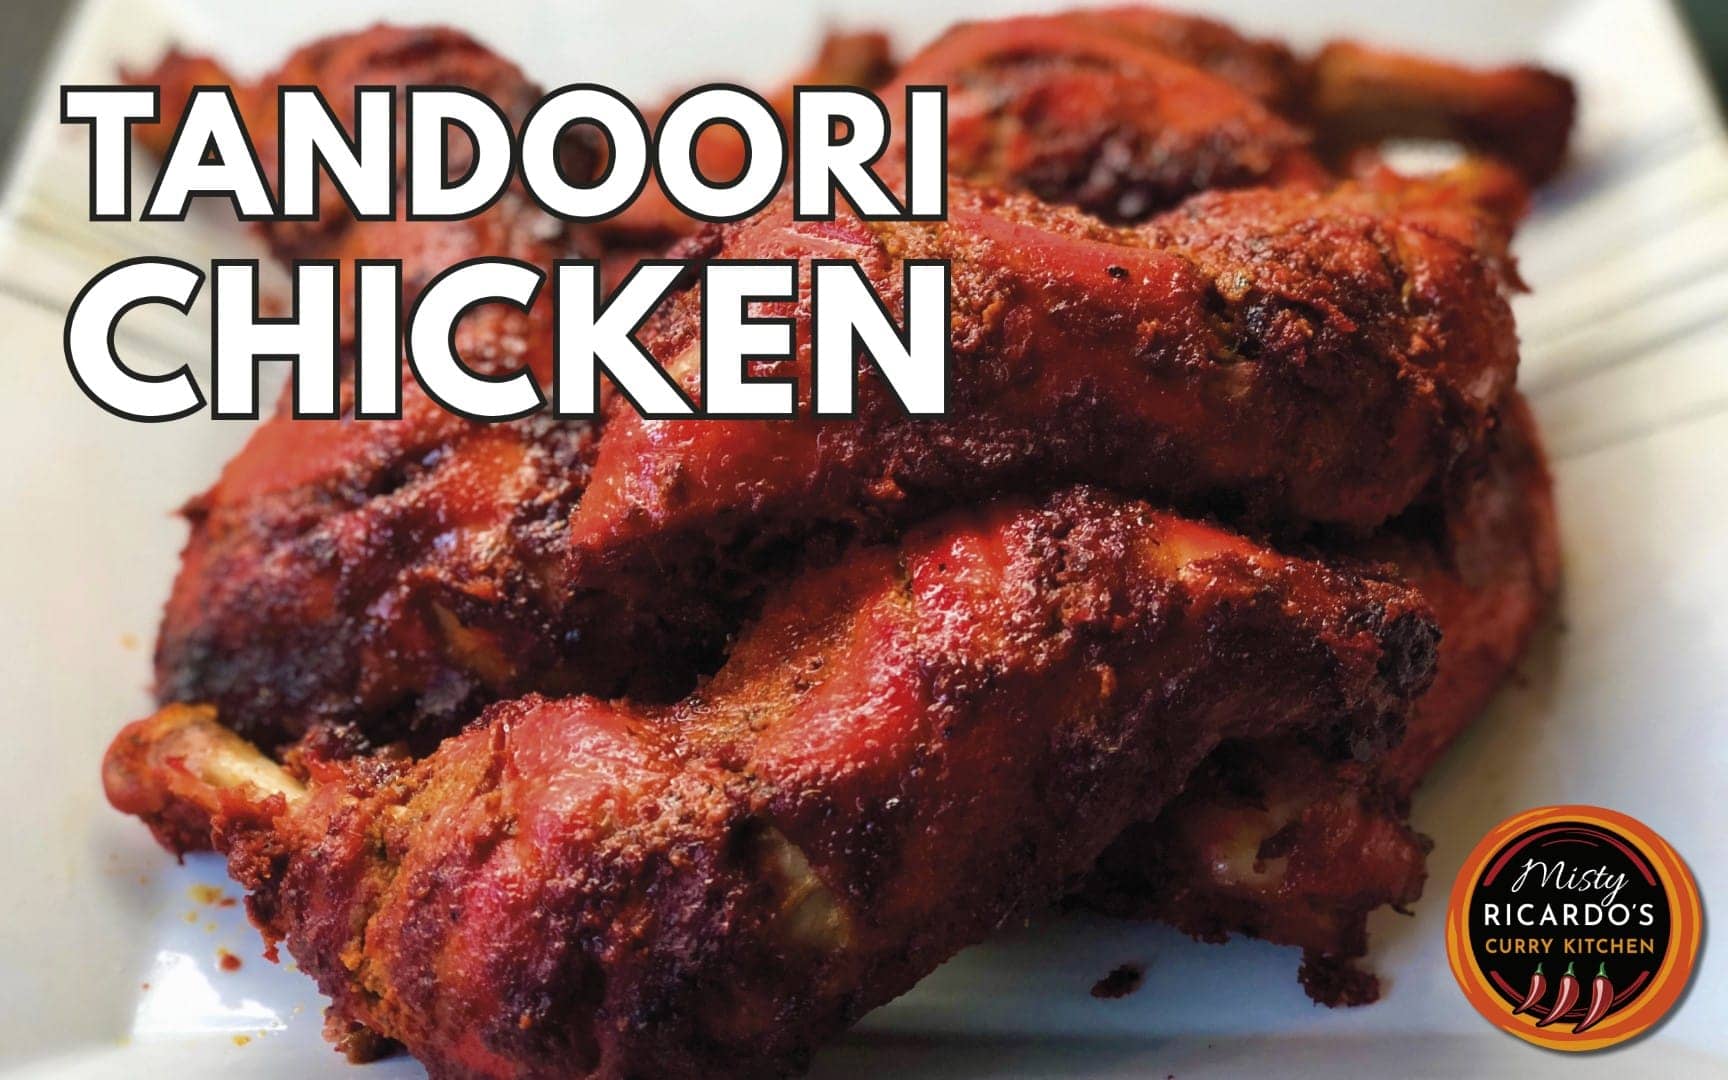 Tandoori Chicken Recipe - Misty Ricardo's Curry Kitchen